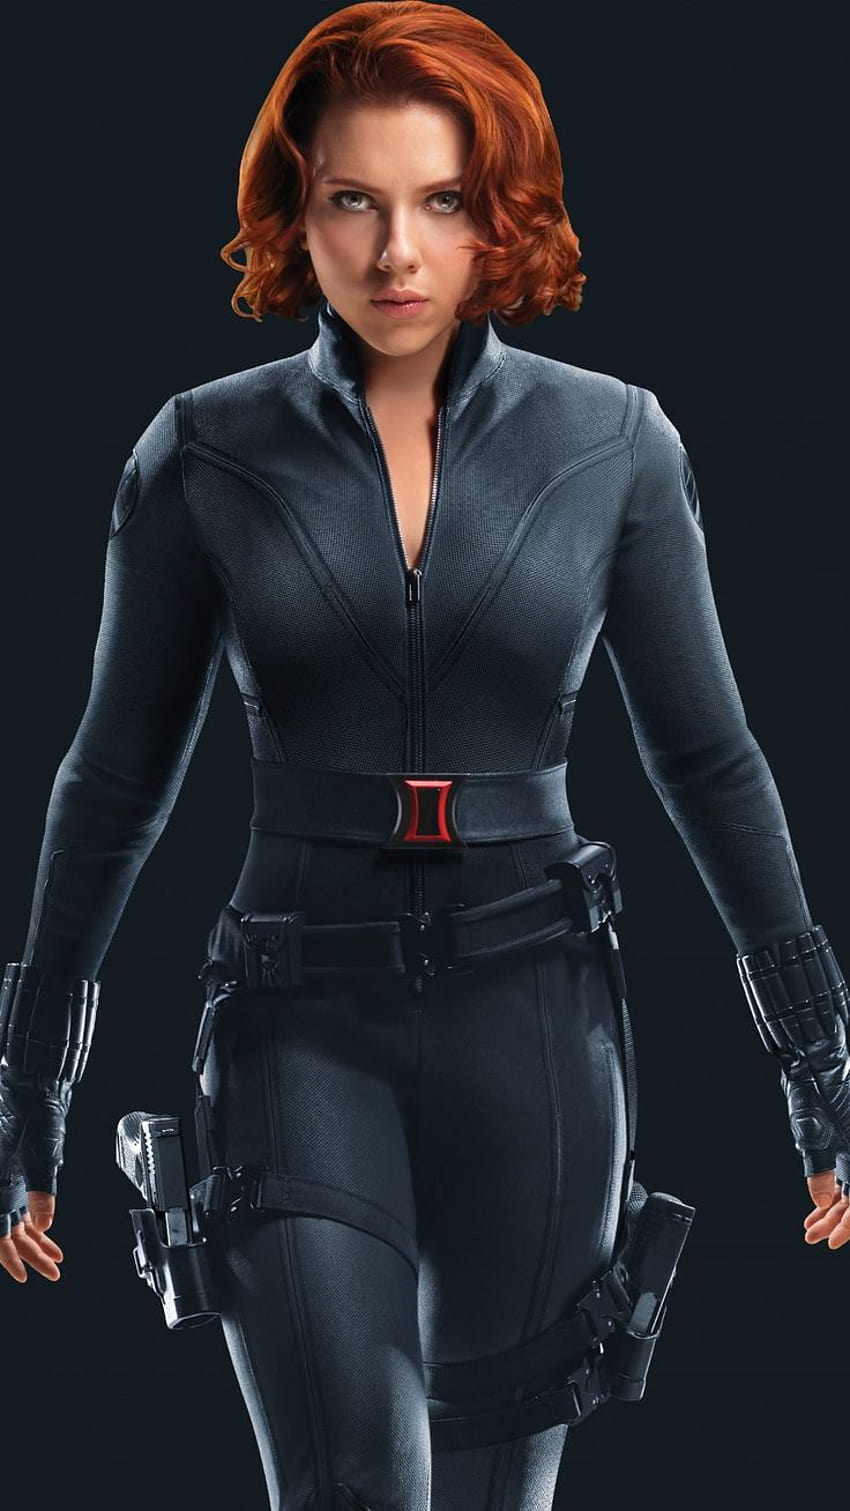 Viuda negra Scarlett Johansson Superhero Ultra Mobile, actriz de los vengadores fondo de pantalla del teléfono